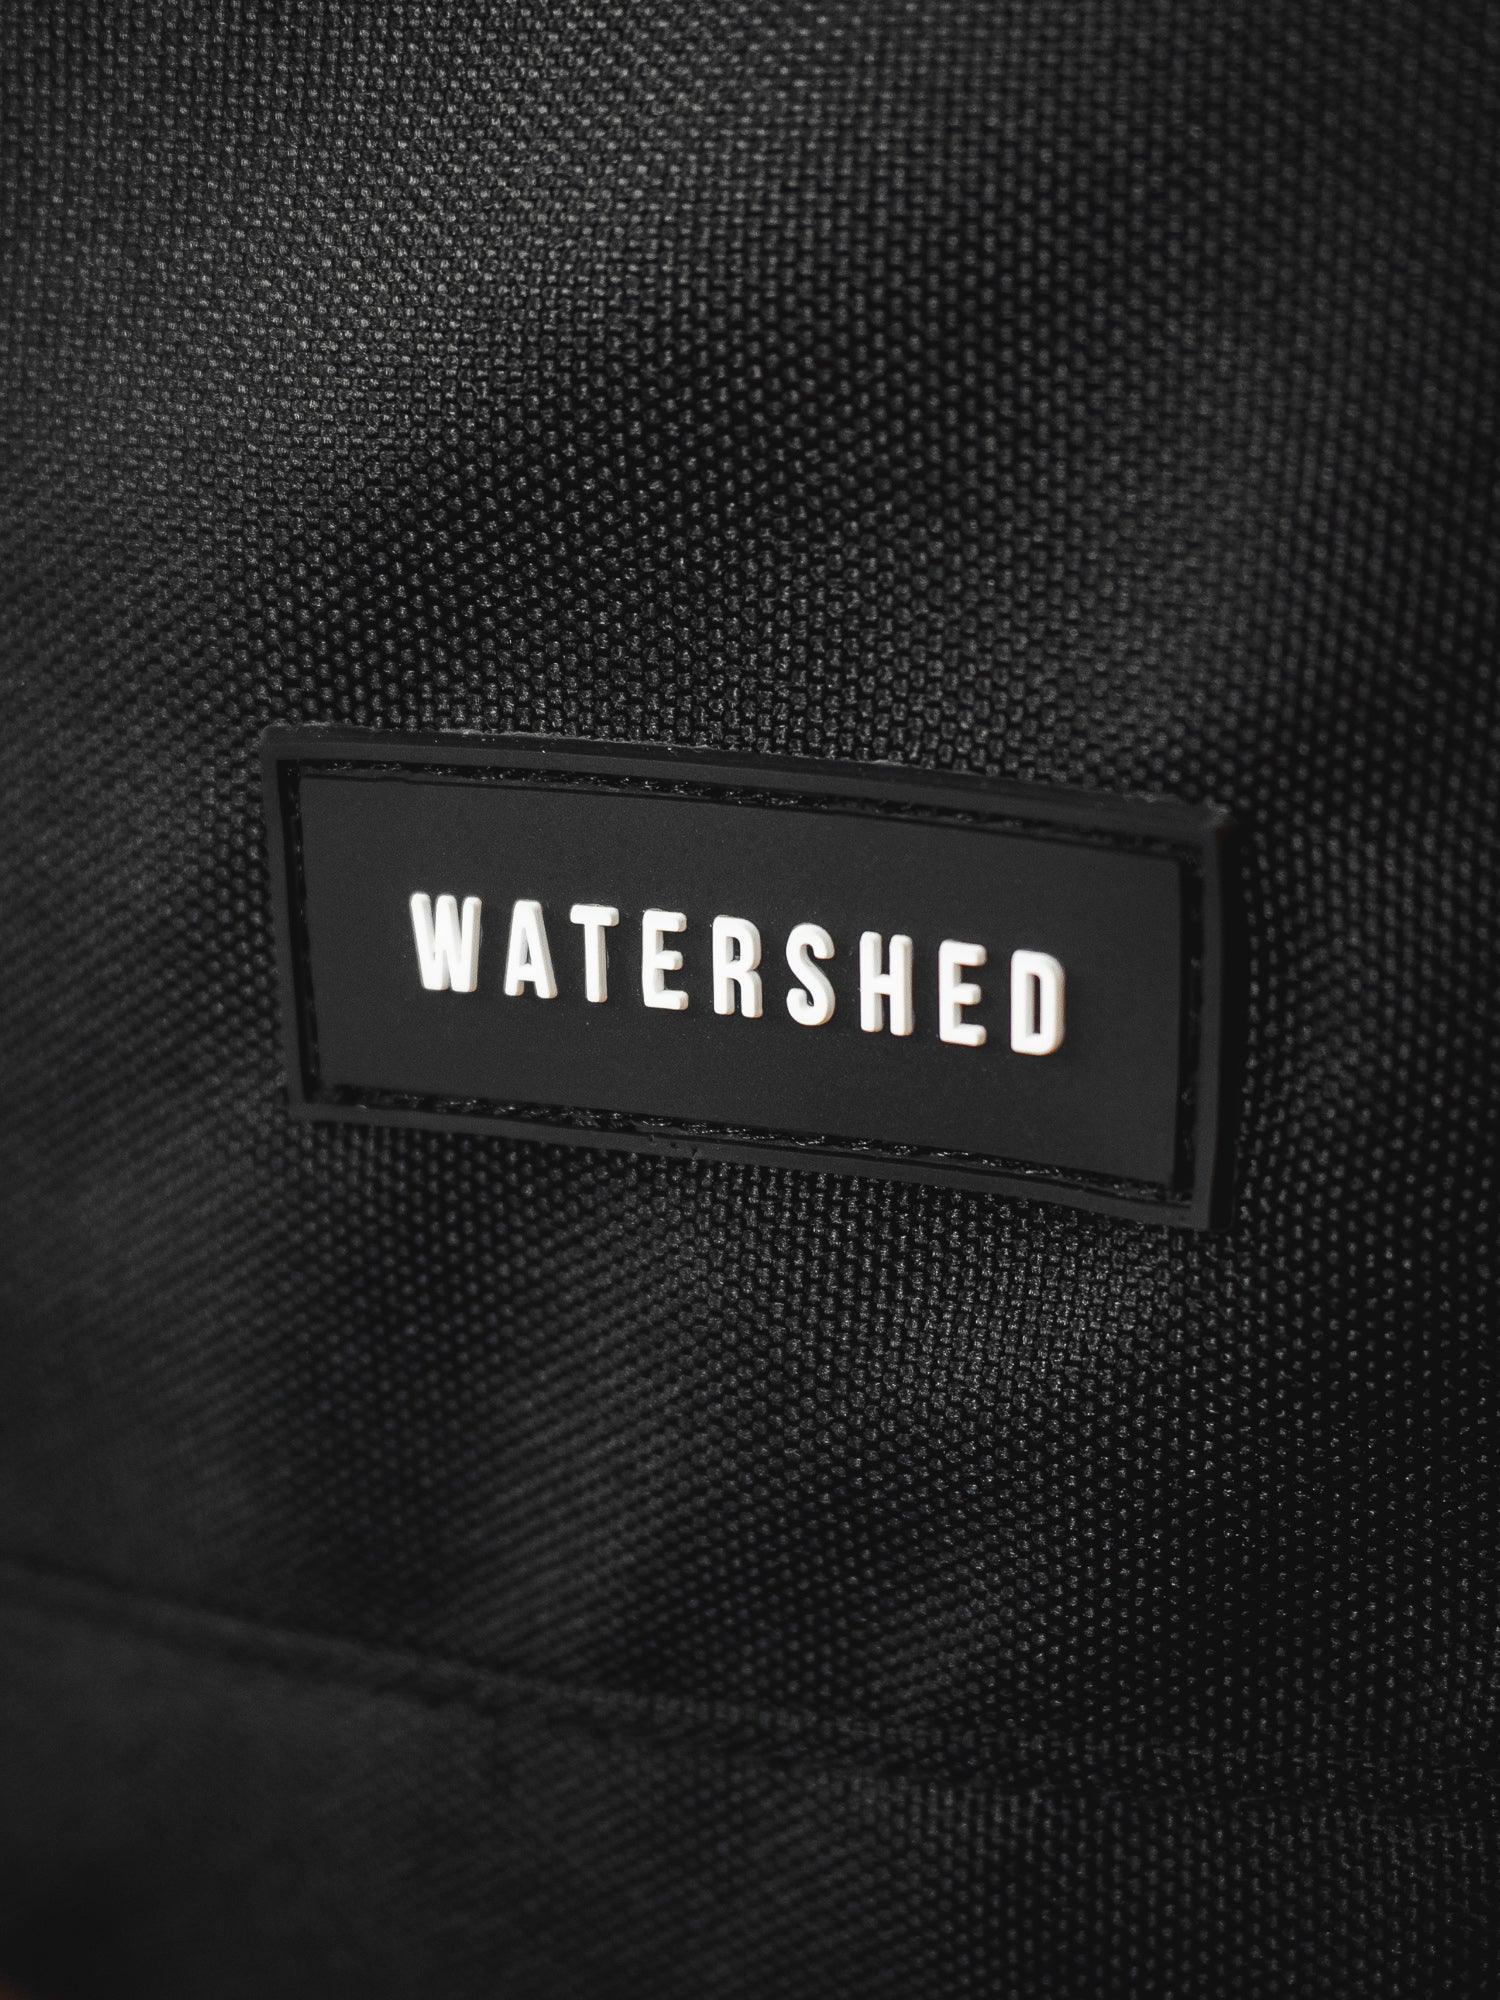 Wayfaring Insulated Cool Bag Backpack - Black - Watershed Brand